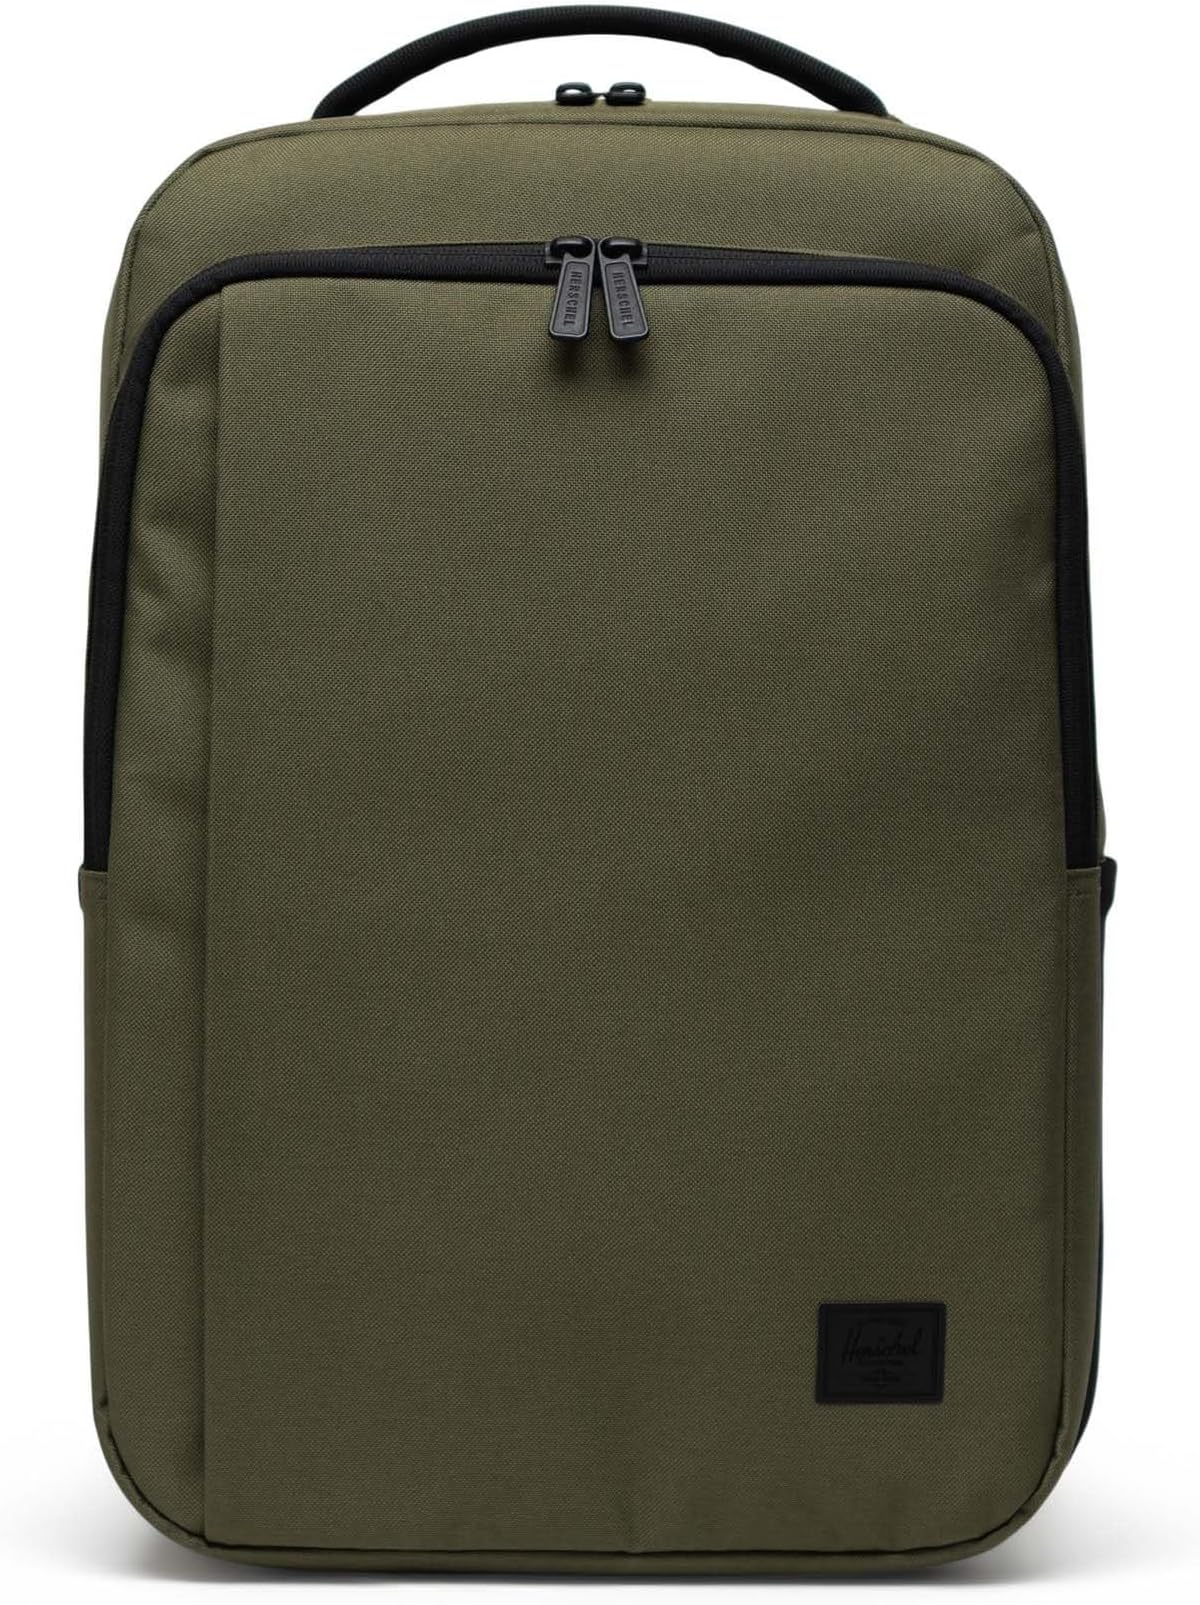 рюкзак retreat backpack herschel supply co цвет ivy green Рюкзак Tech Kaslo Daypack Herschel Supply Co., цвет Ivy Green